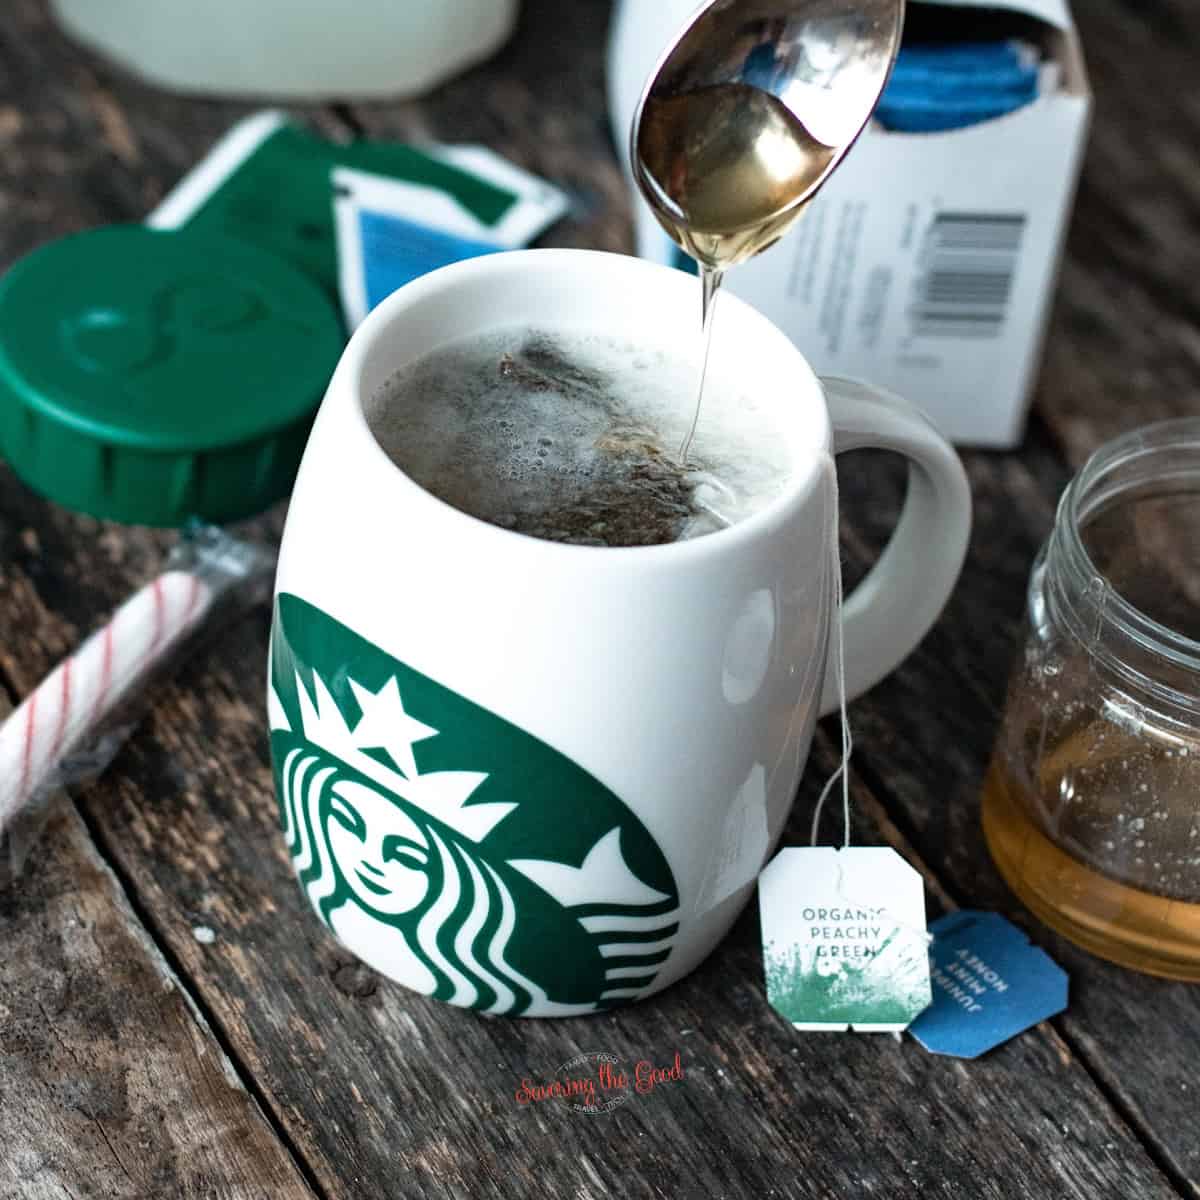 starbucks medicine ball tea.
This Starbucks medicine ball tea contains Jade citrus mint tea, honey citrus mint tea, peach tranquility herbal tea (both Teavana) steamed lemonade, honey, and an optional pump of peppermint syrup.